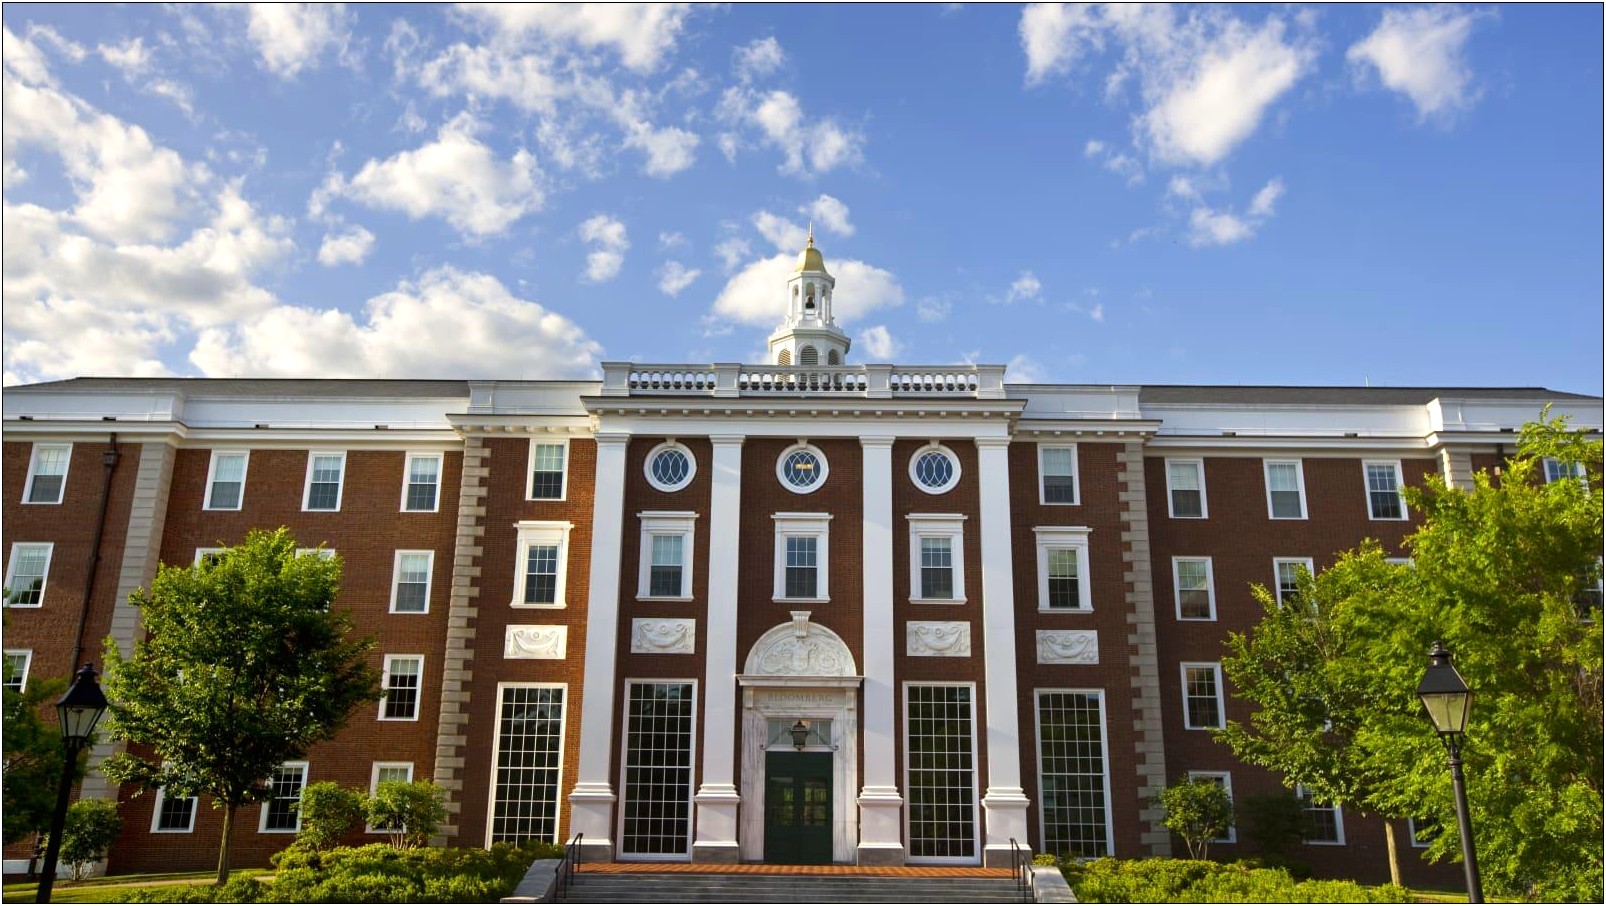 Harvard Graduate School Of Education Cover Letter Resume